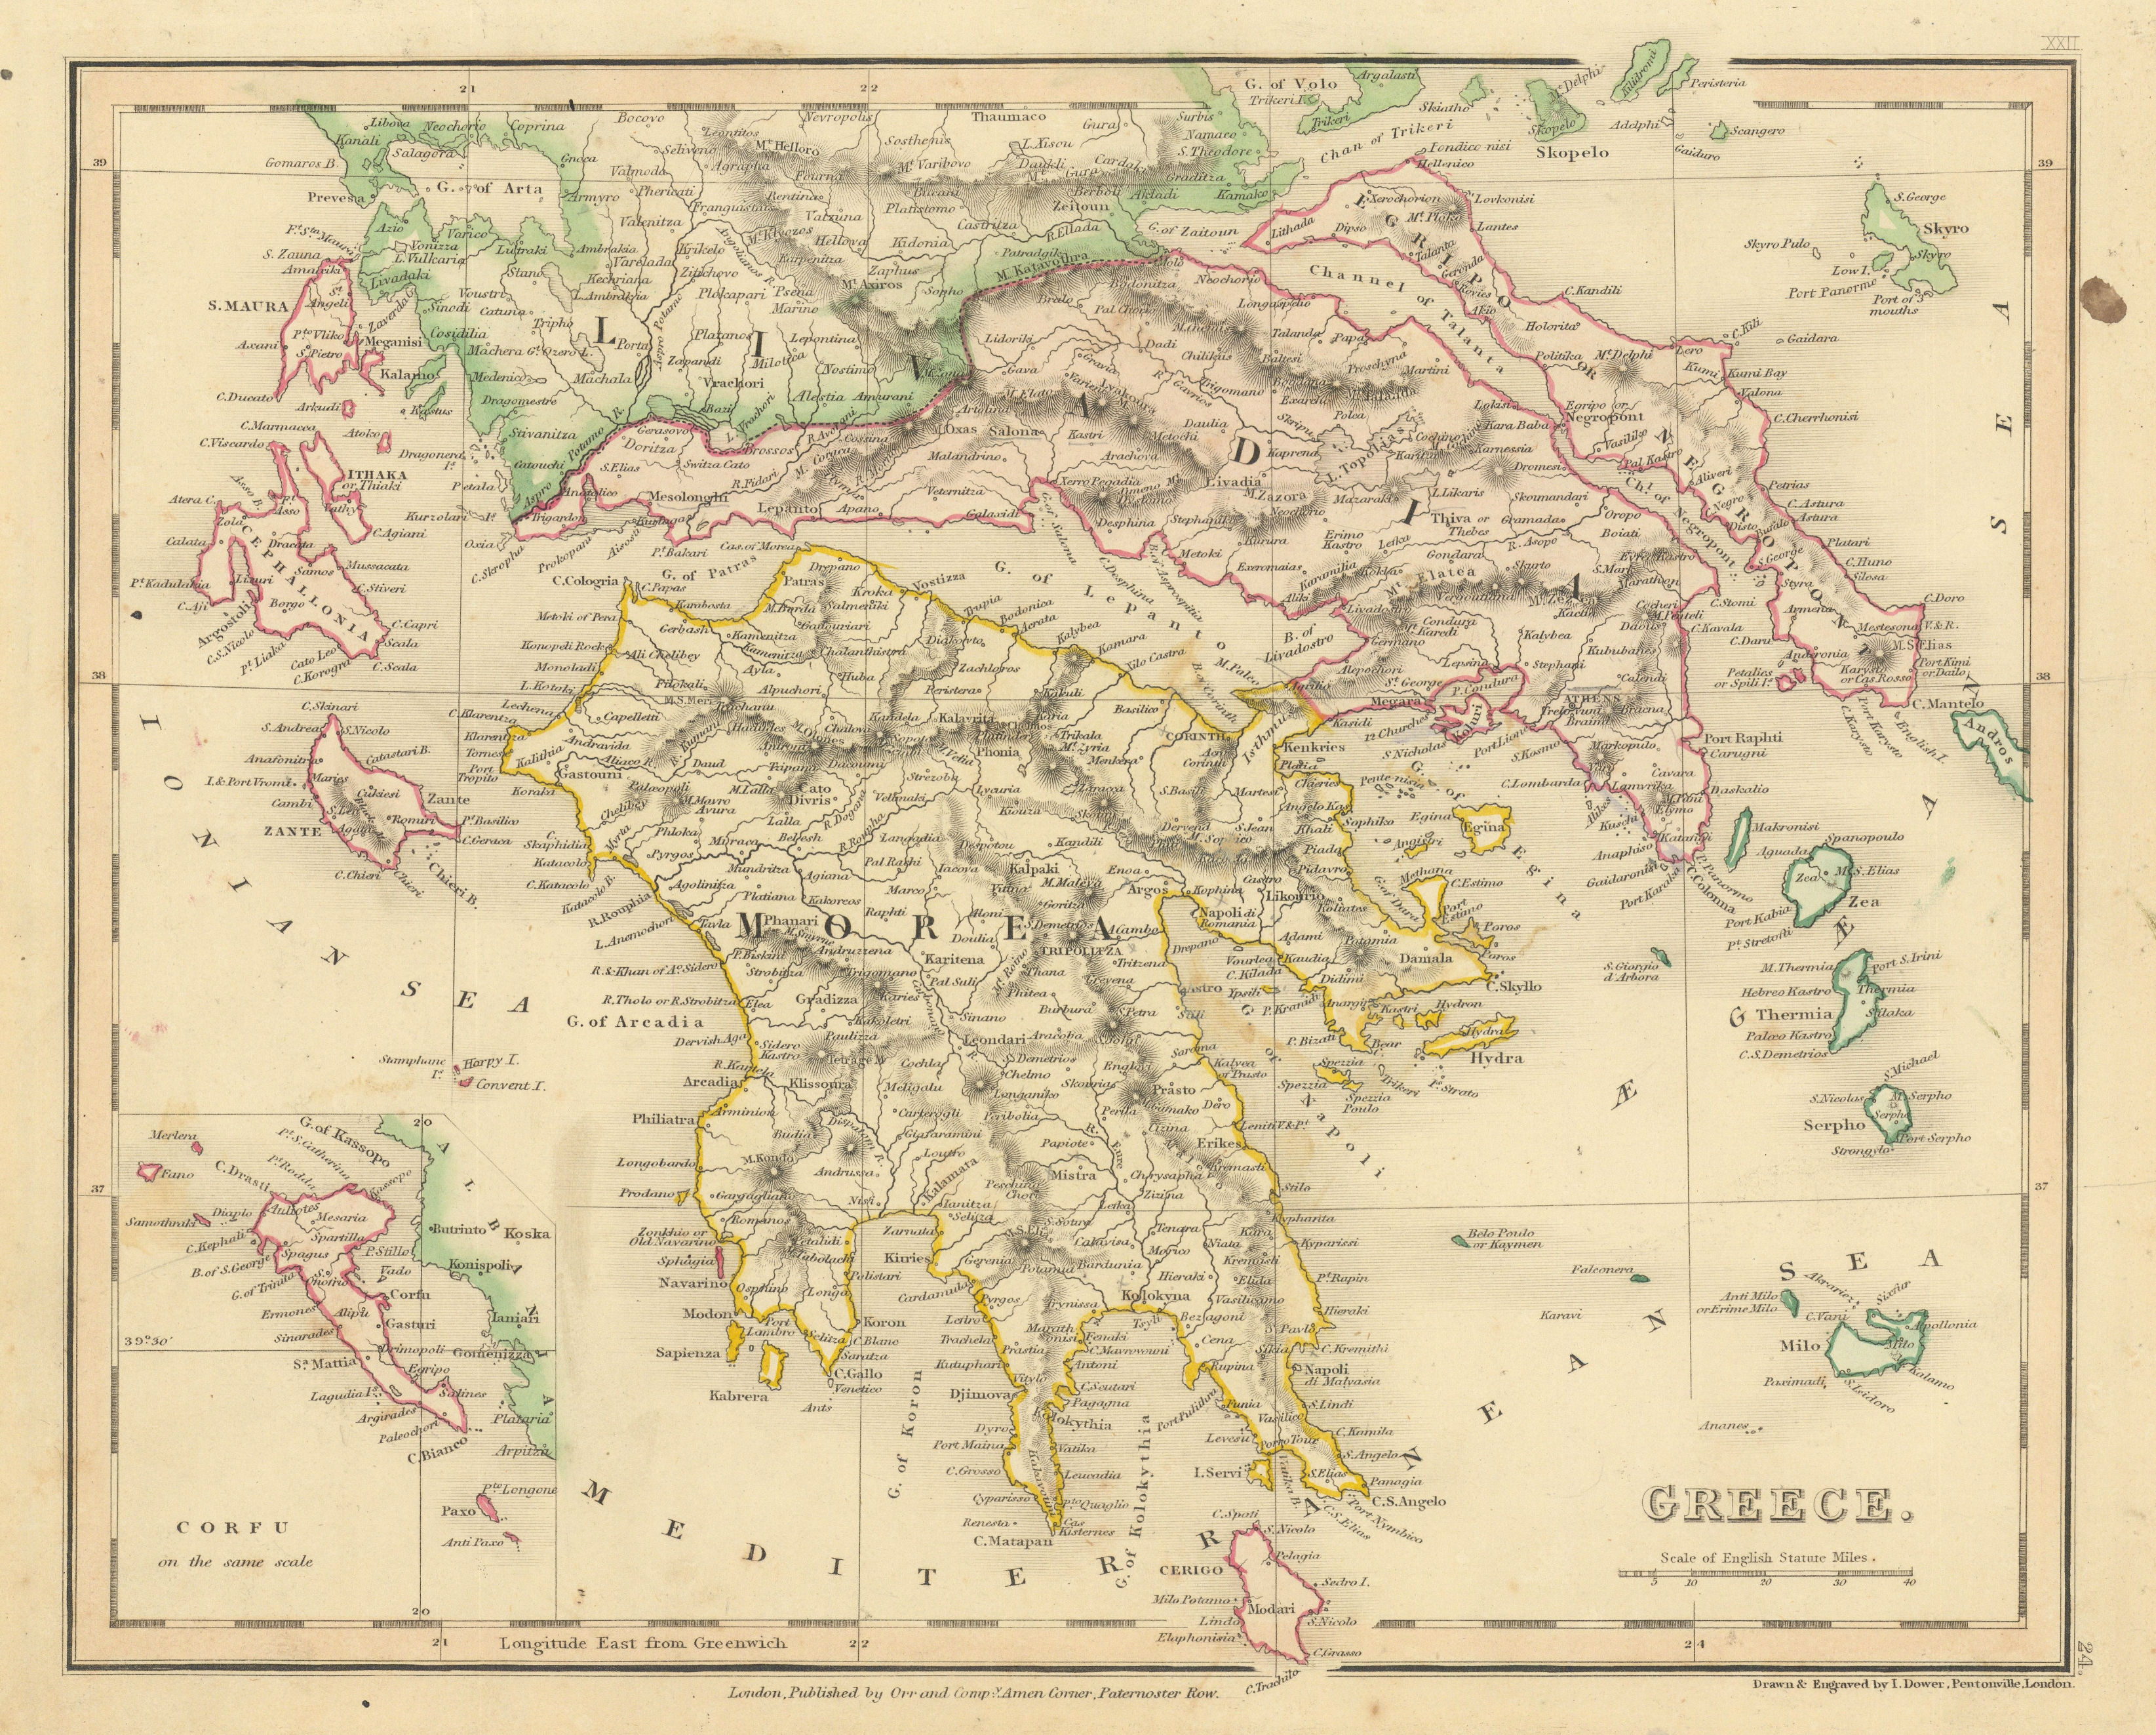 Associate Product Greece by John Dower. Morea Livadia. Ionian Sporades Cyclades Islands 1845 map